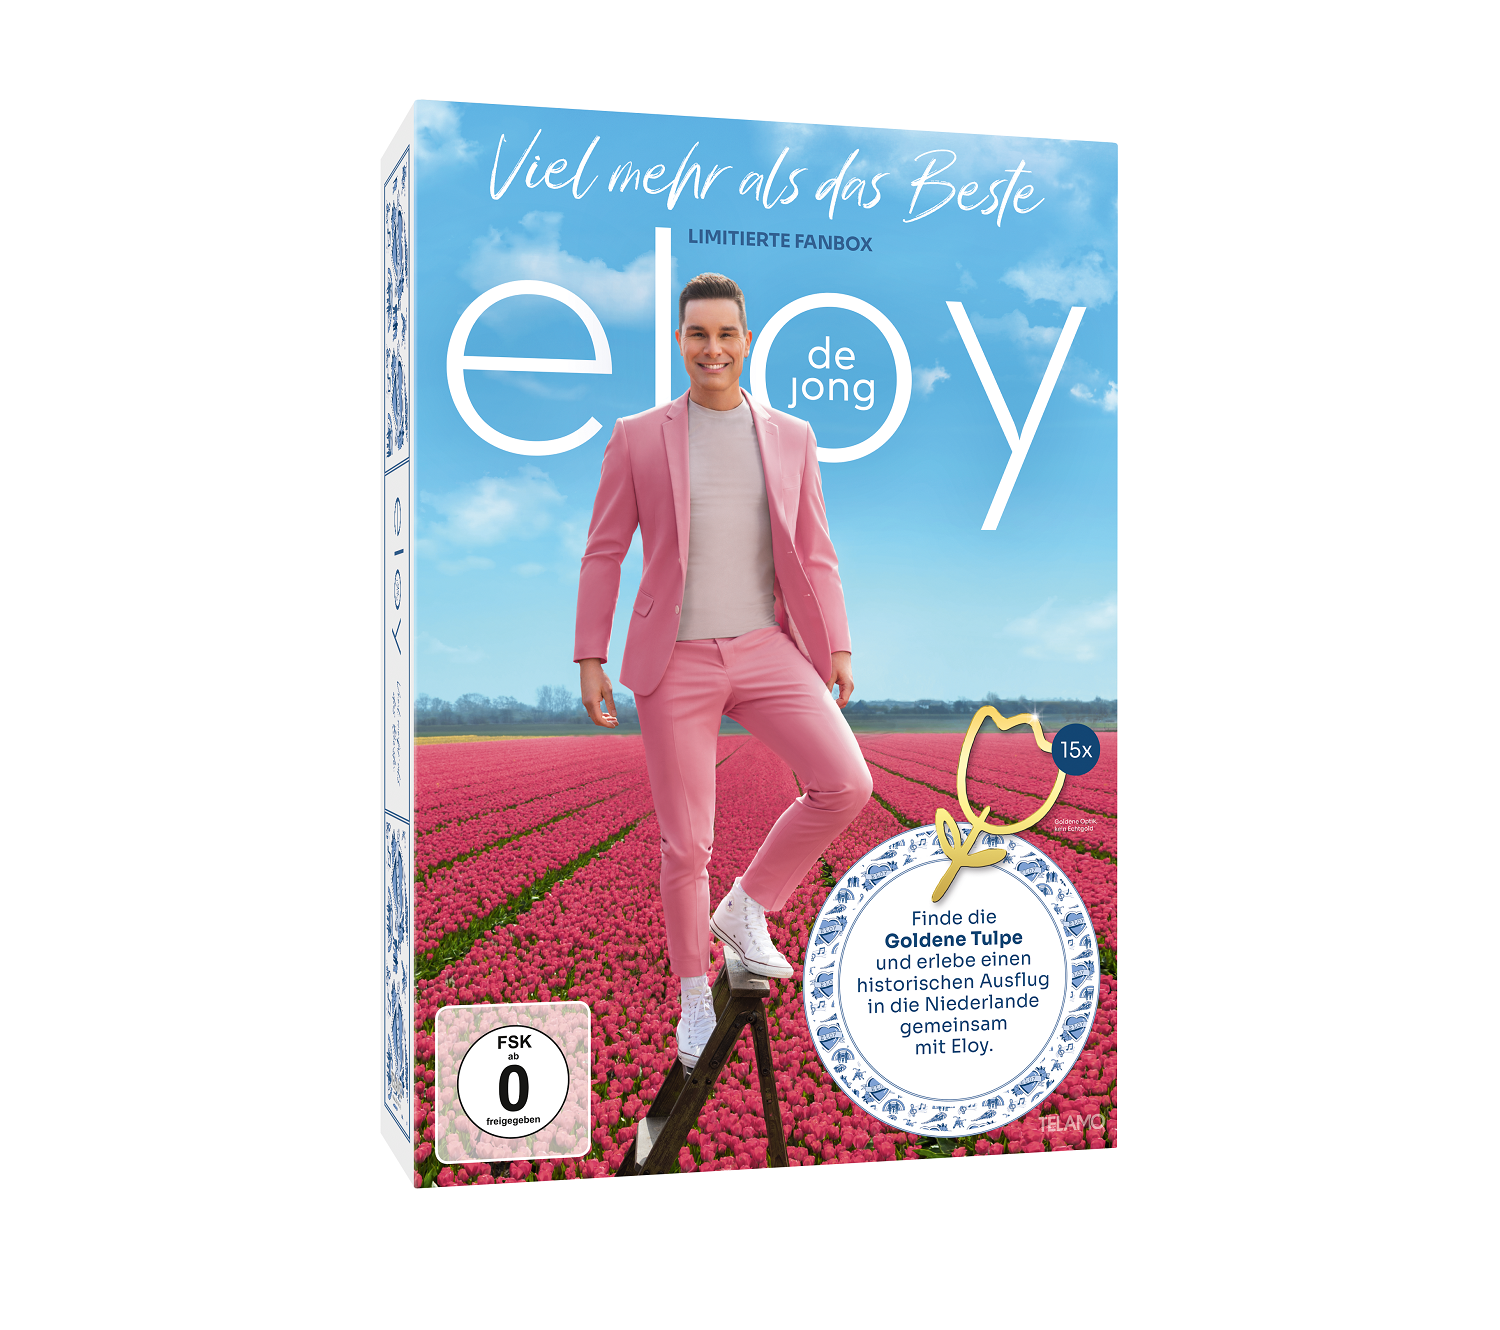 mehr Edition) das Video) DVD Eloy Beste(Ltd.Fanbox - Viel Jong De als + - (CD